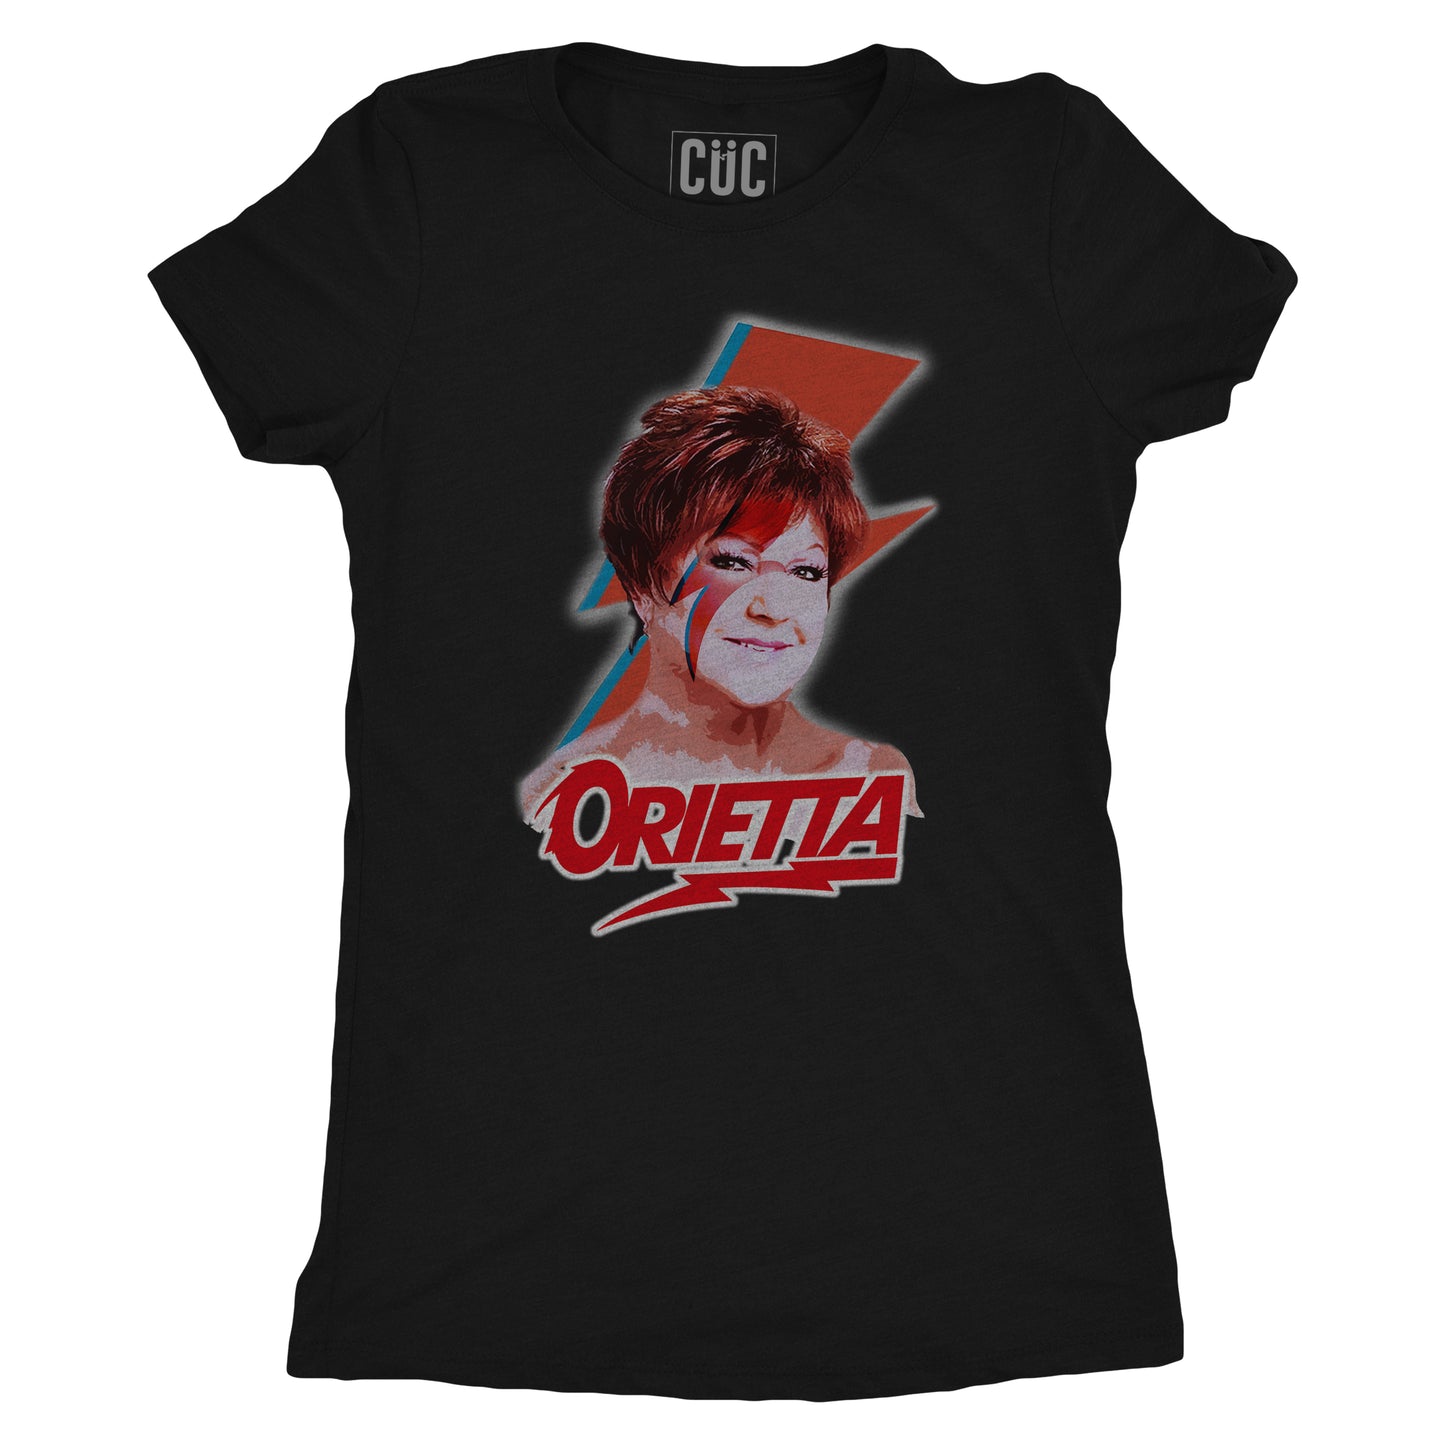 T-Shirt Orietta like David Sanremo 2021 - Trash Italiano - MUSIC #chooseurcolor - CUC chooseurcolor